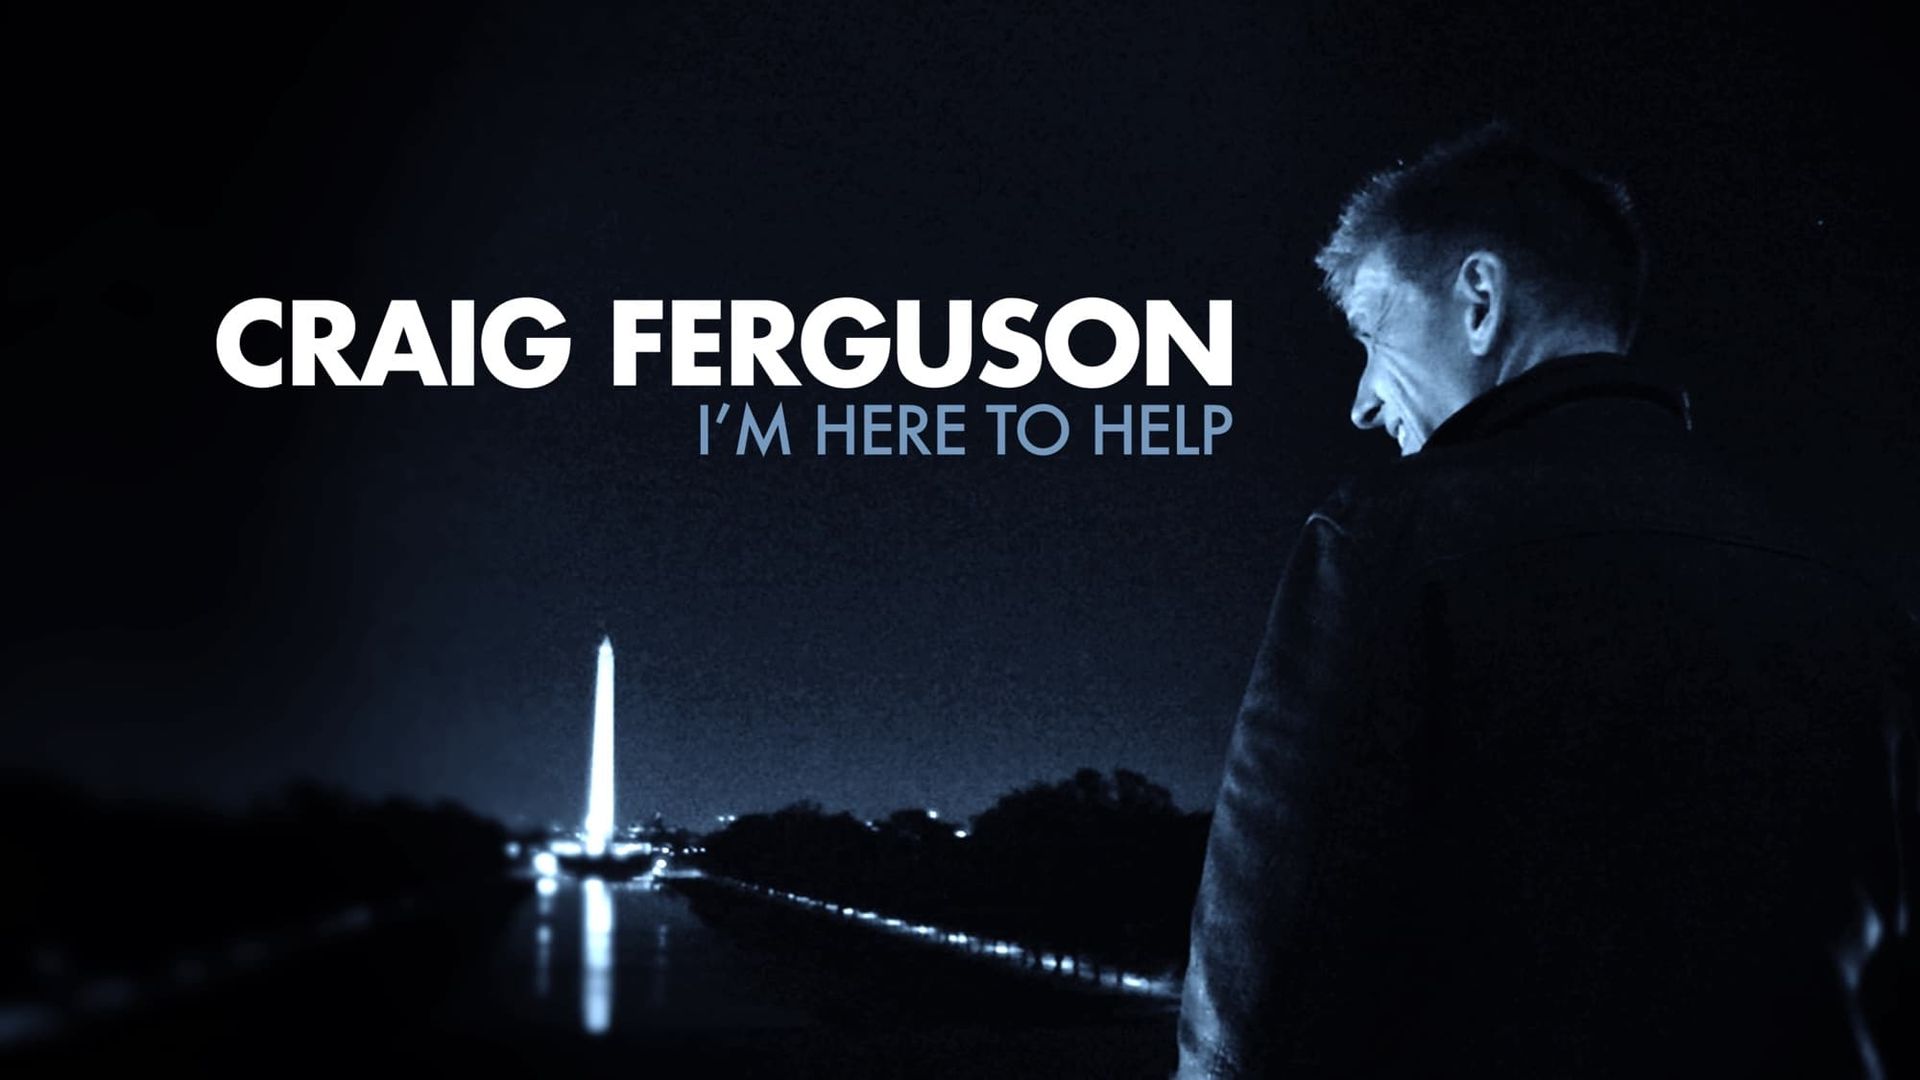 Craig Ferguson: I'm Here to Help background